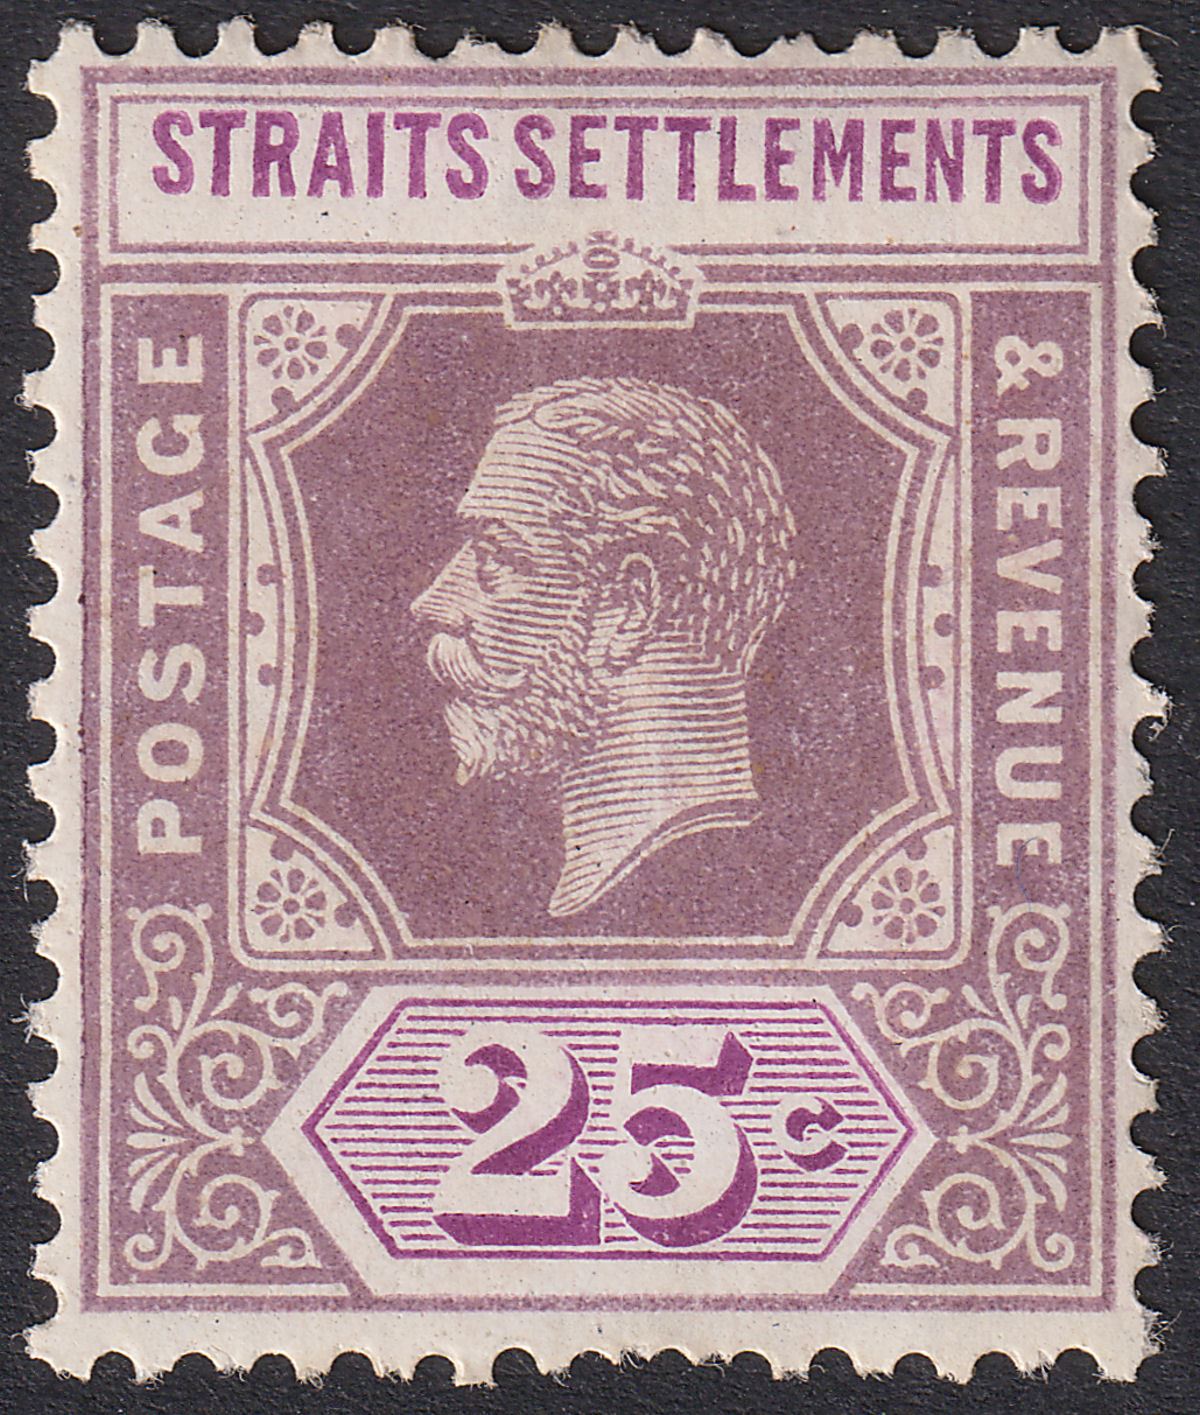 Malaya Straits Settlements 1914 KGV 25c Purple + Mauve wmk Inverted Mint SG205aw